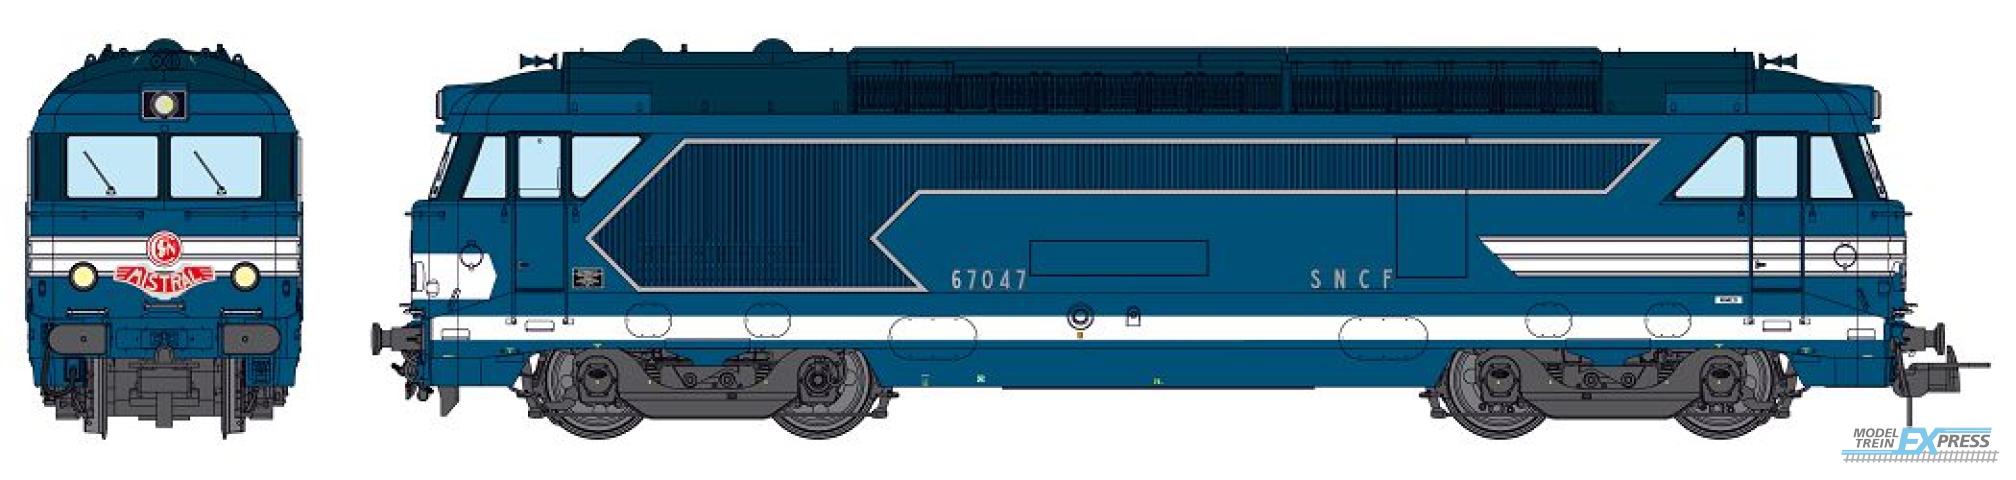 REE models MB-150S BB 67047 Nîmes depot, original condition, « Mistral » train plate Era III-IV - DCC Sound & Smoke